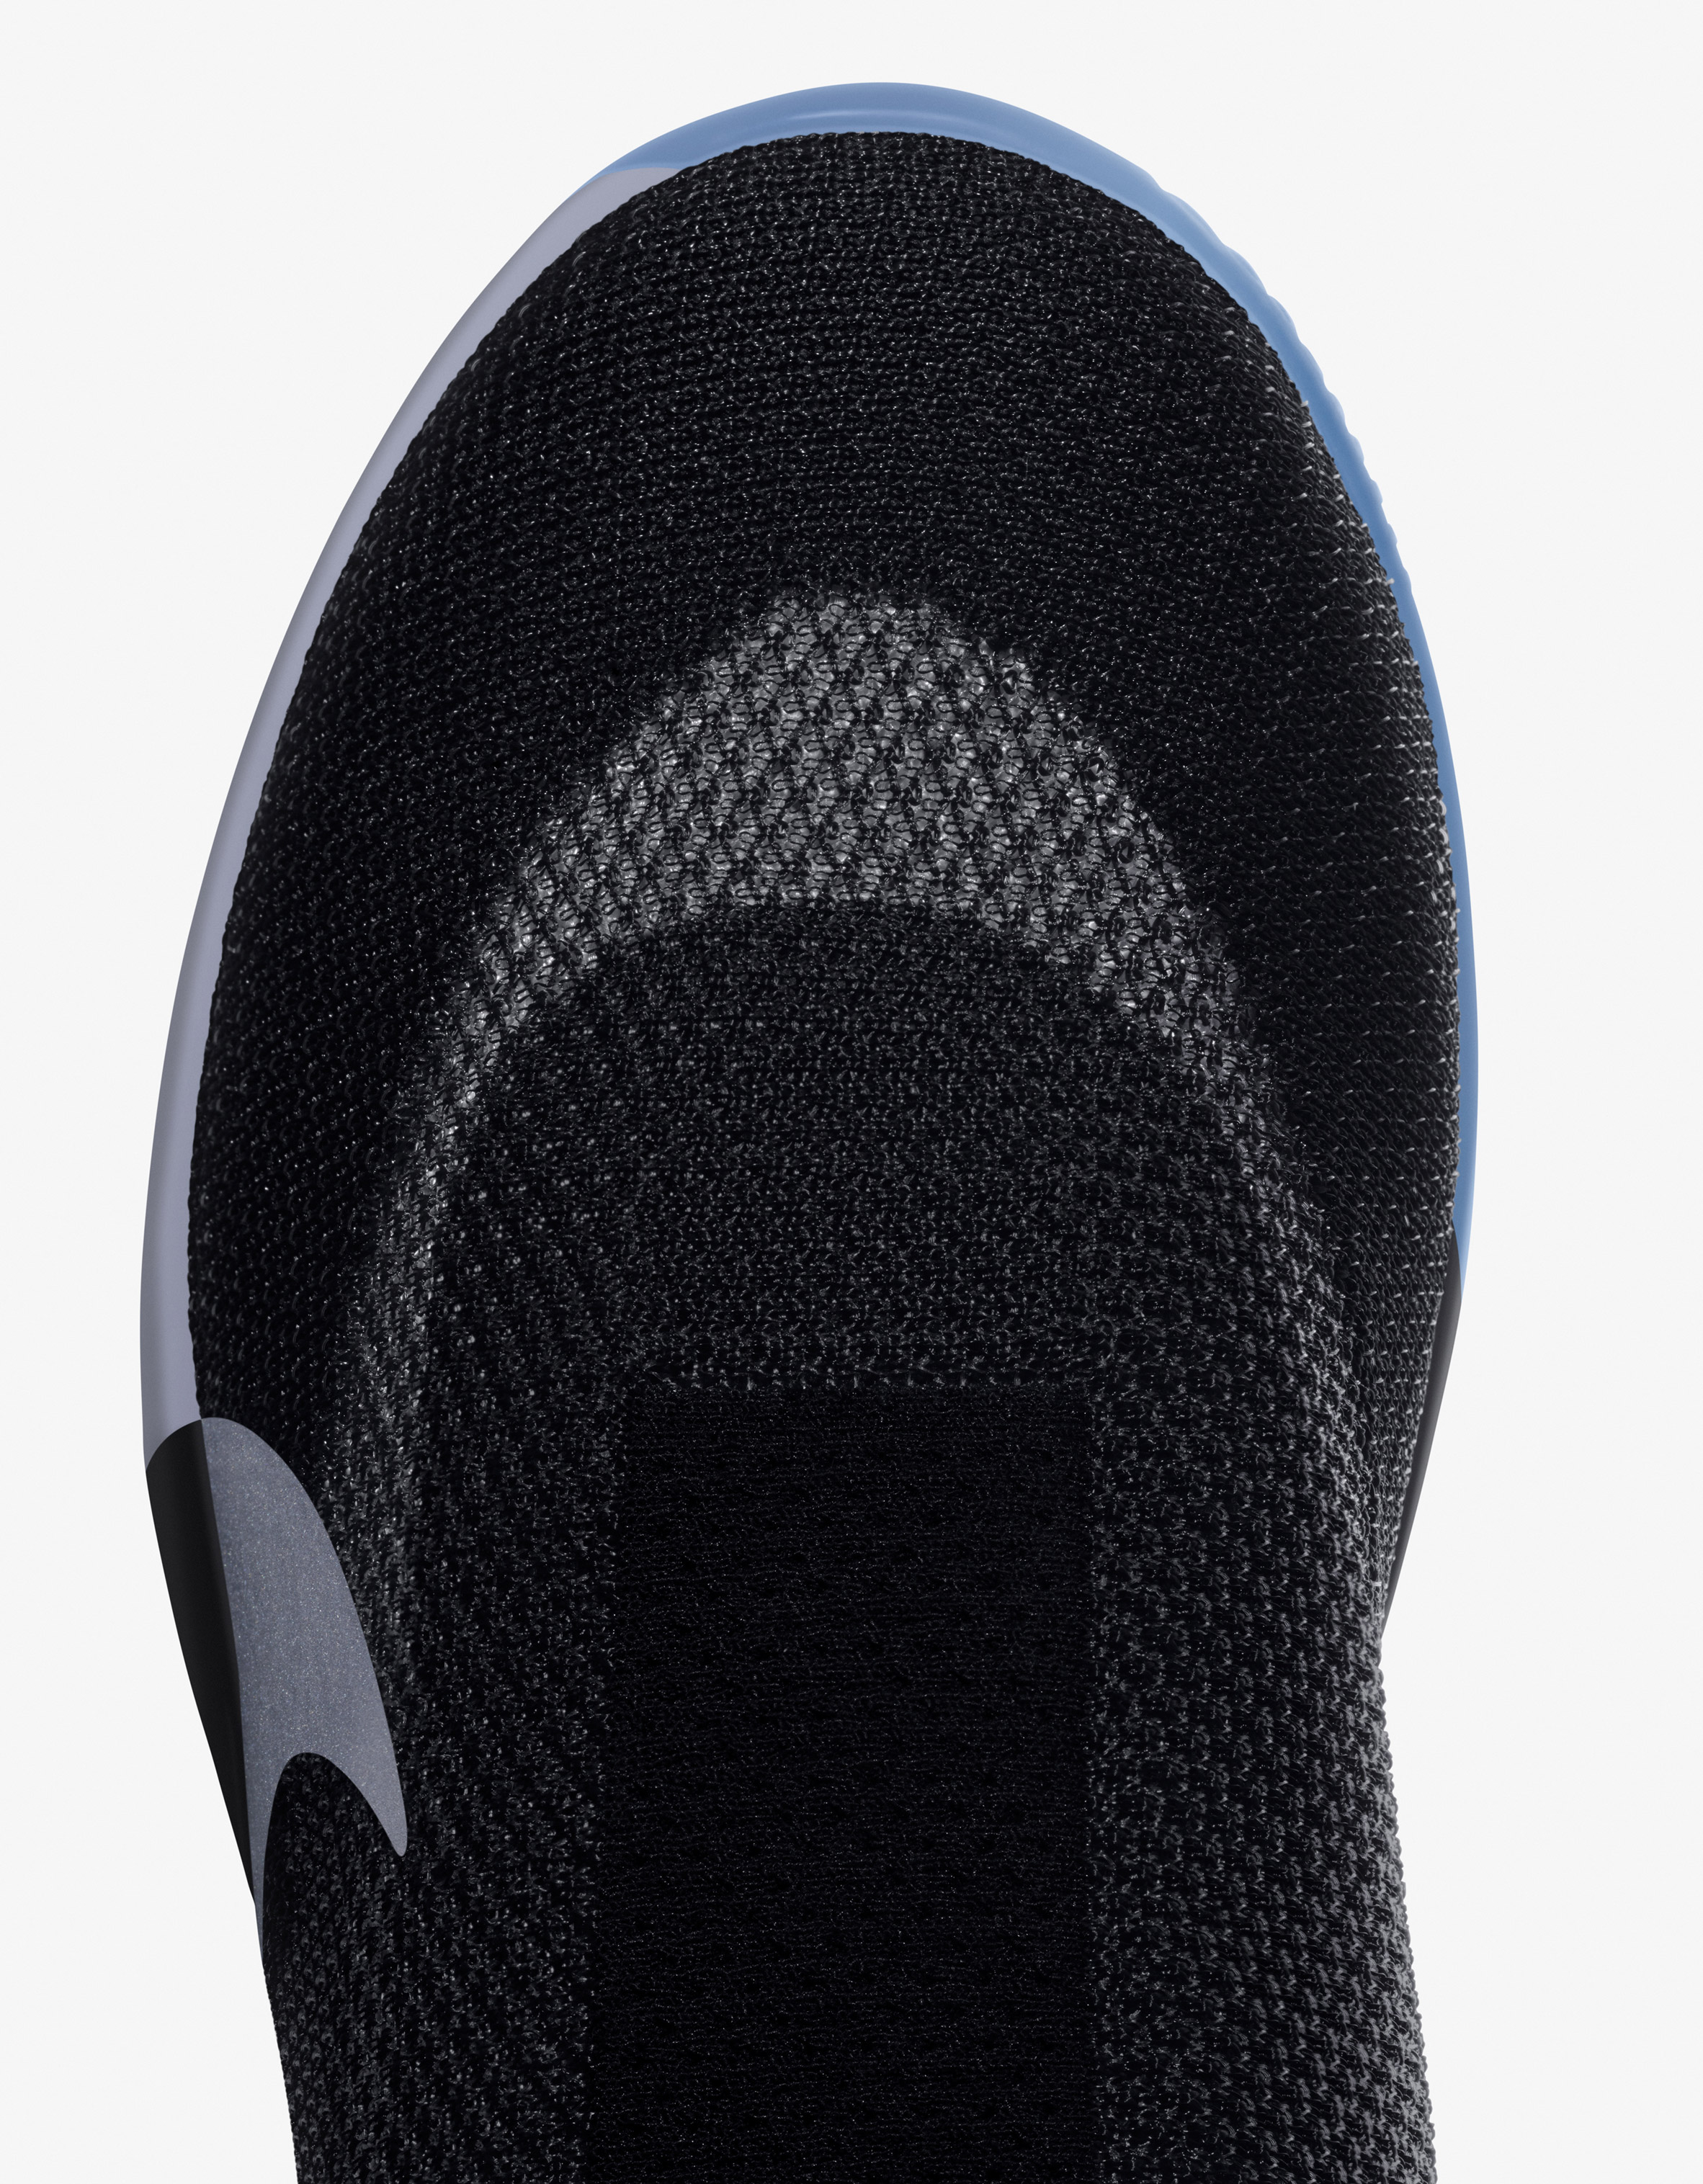 Nike's Self-Lacing Adapt BB Basketball Shoe Is Actually Smart